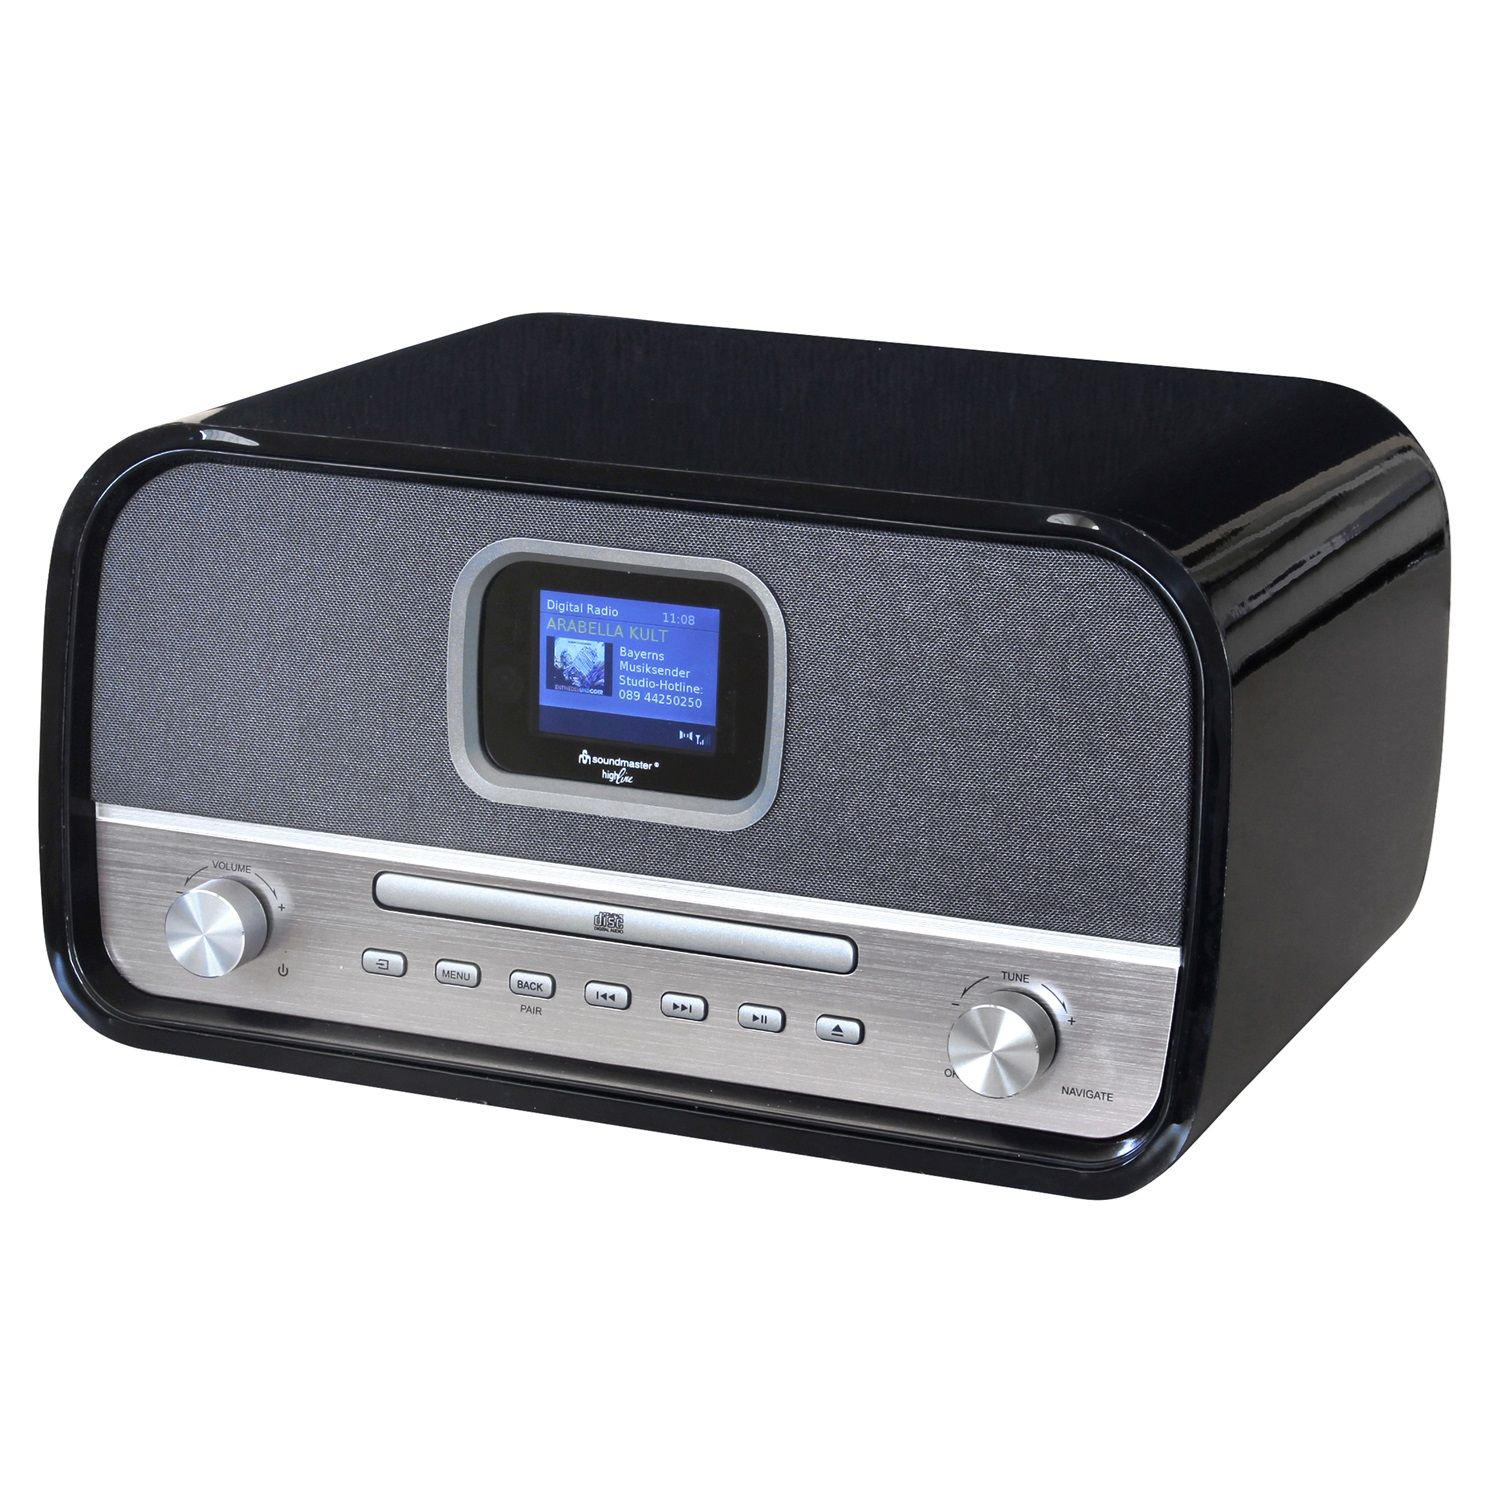 SOUNDMASTER DAB970SW Multifunktionsradio, DAB+, holzoptik DAB, AM, FM, FM, DAB+, Bluetooth